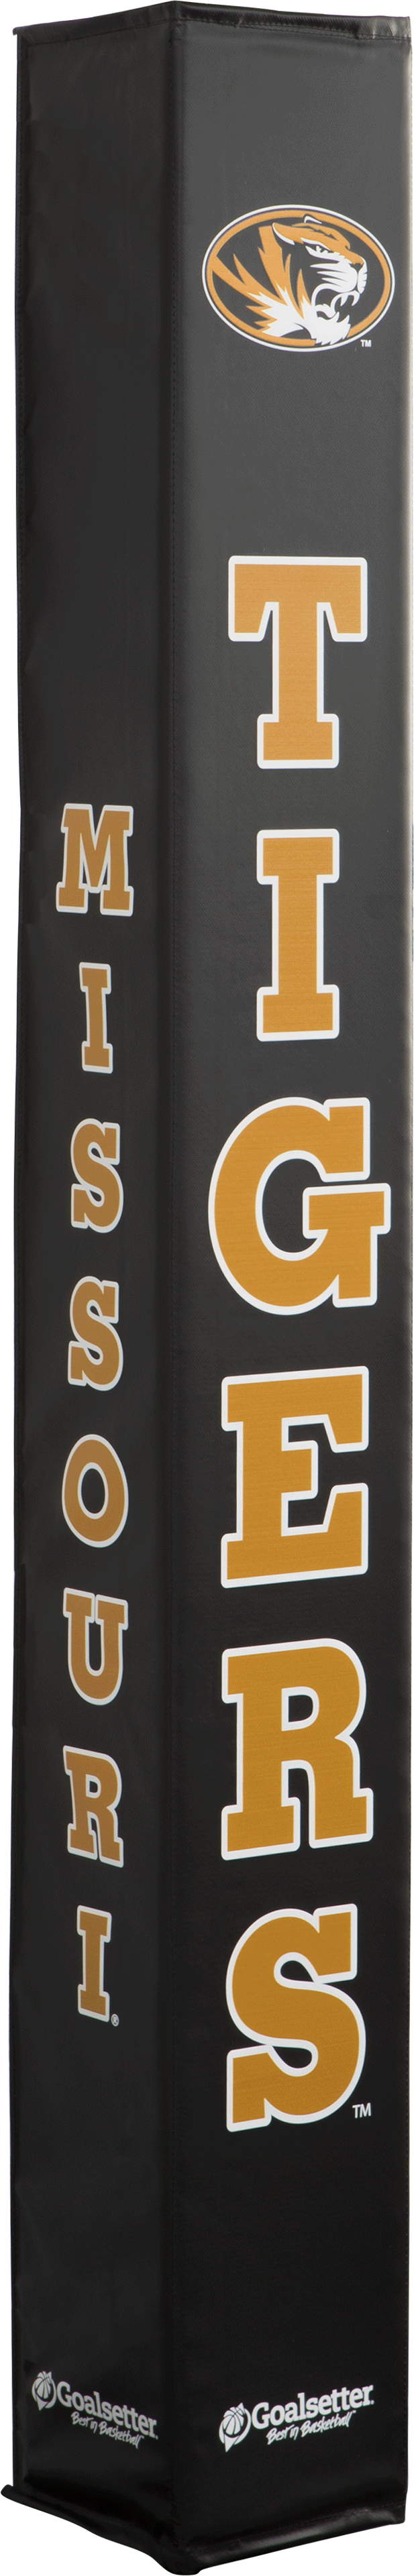 Goalsetter Basketball - Collegiate Black Basketball Pole Pad - MO Tigers - Missouri Basketball